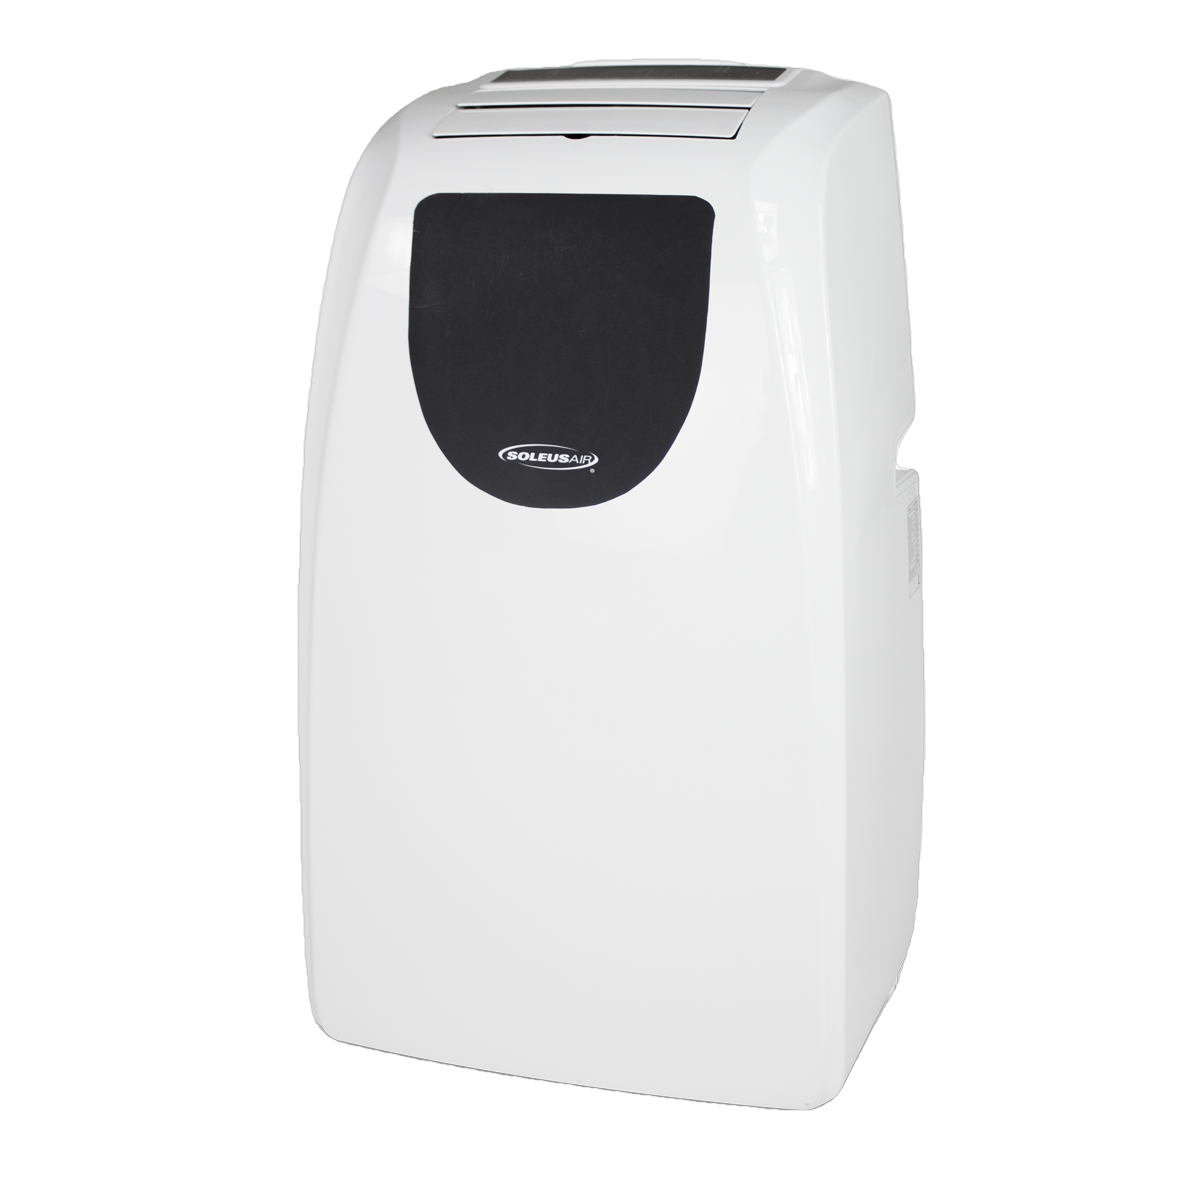 Soleus Air, Soleus Air LX-140 Portable Air Conditioner, Dehumidifier, and Heater New